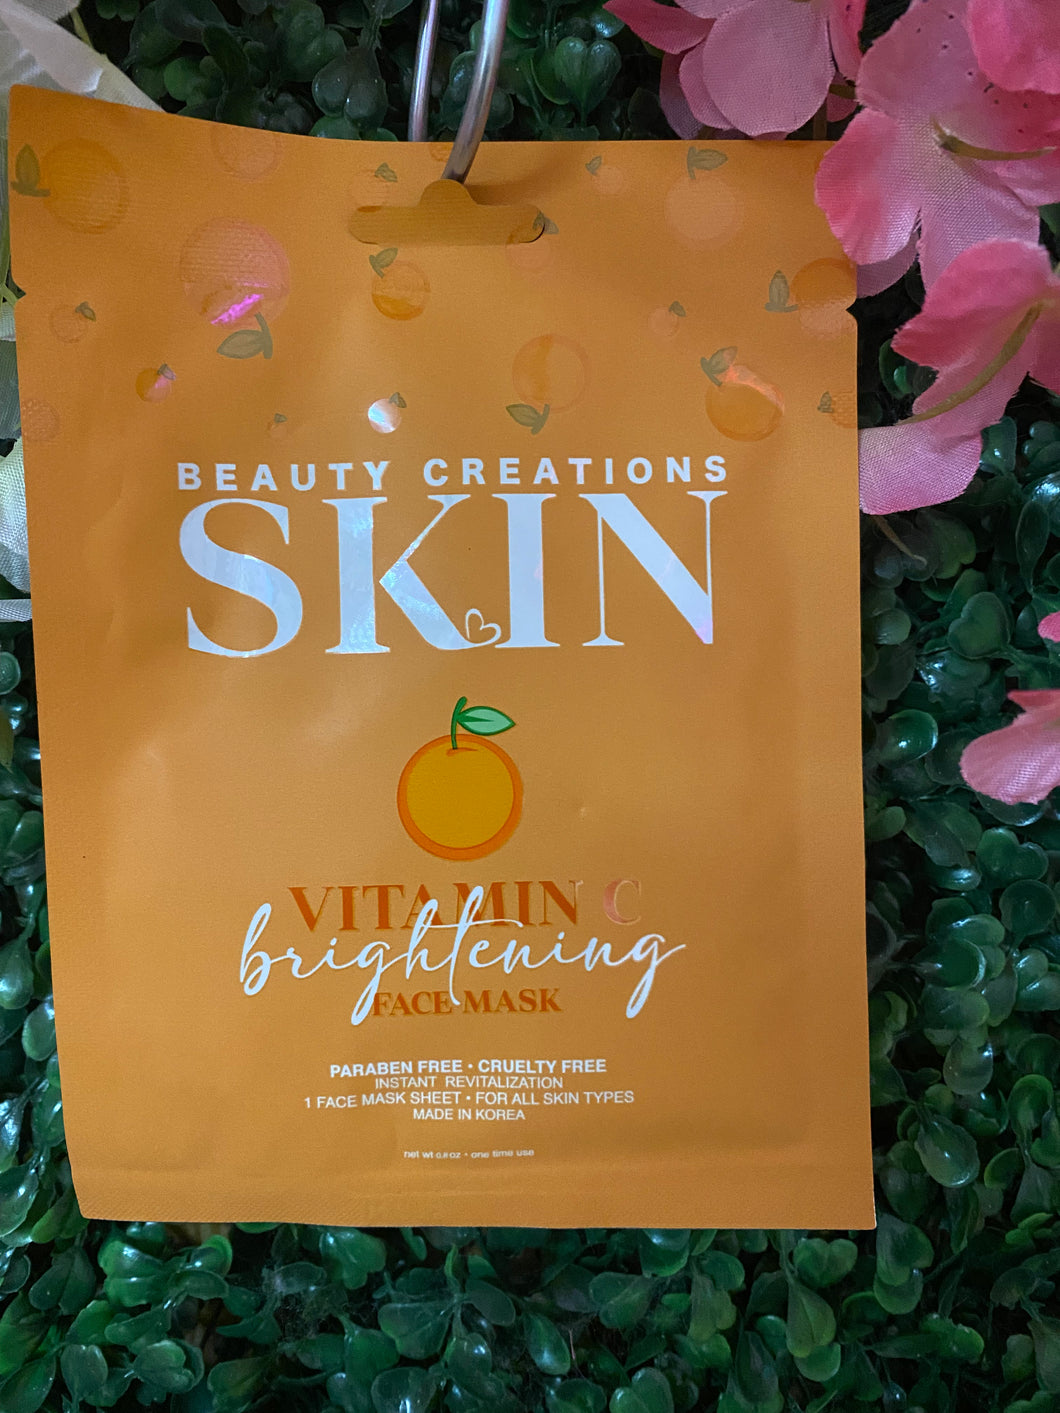 Beauty Creations Skin Facemask “Vitamin C”